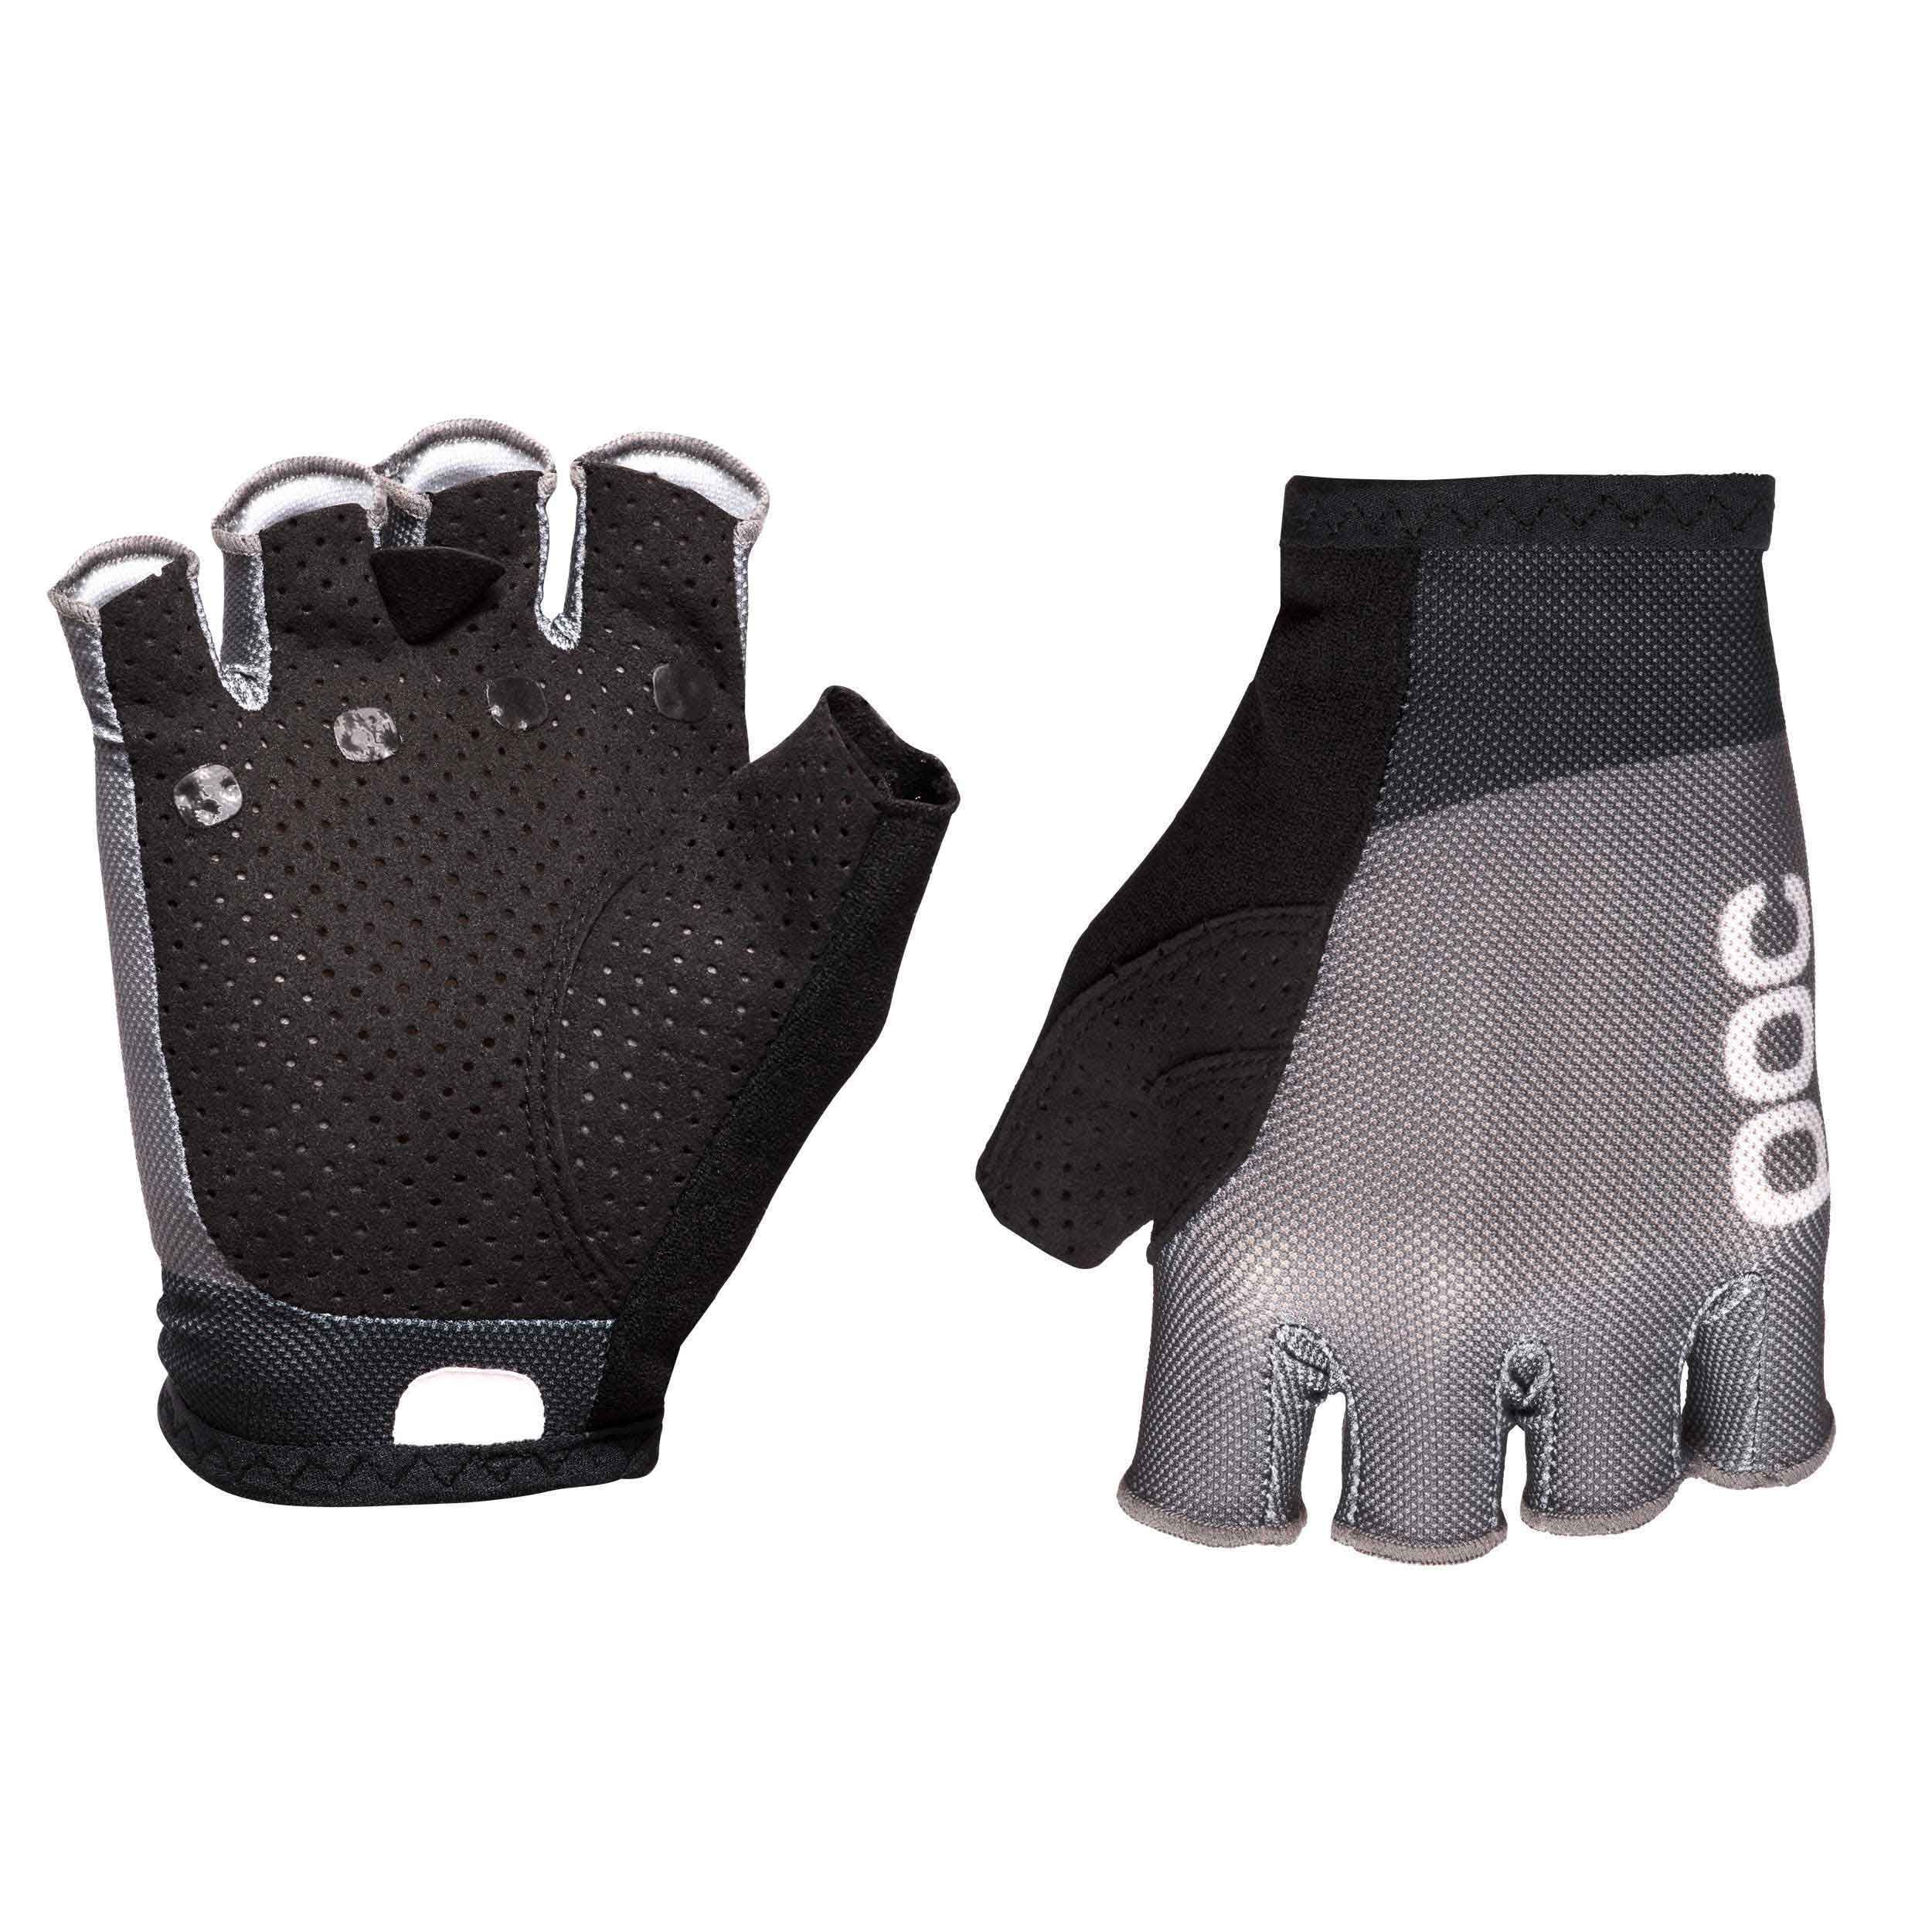 Poc Essential Road Mesh Short Glove - Short finger gloves